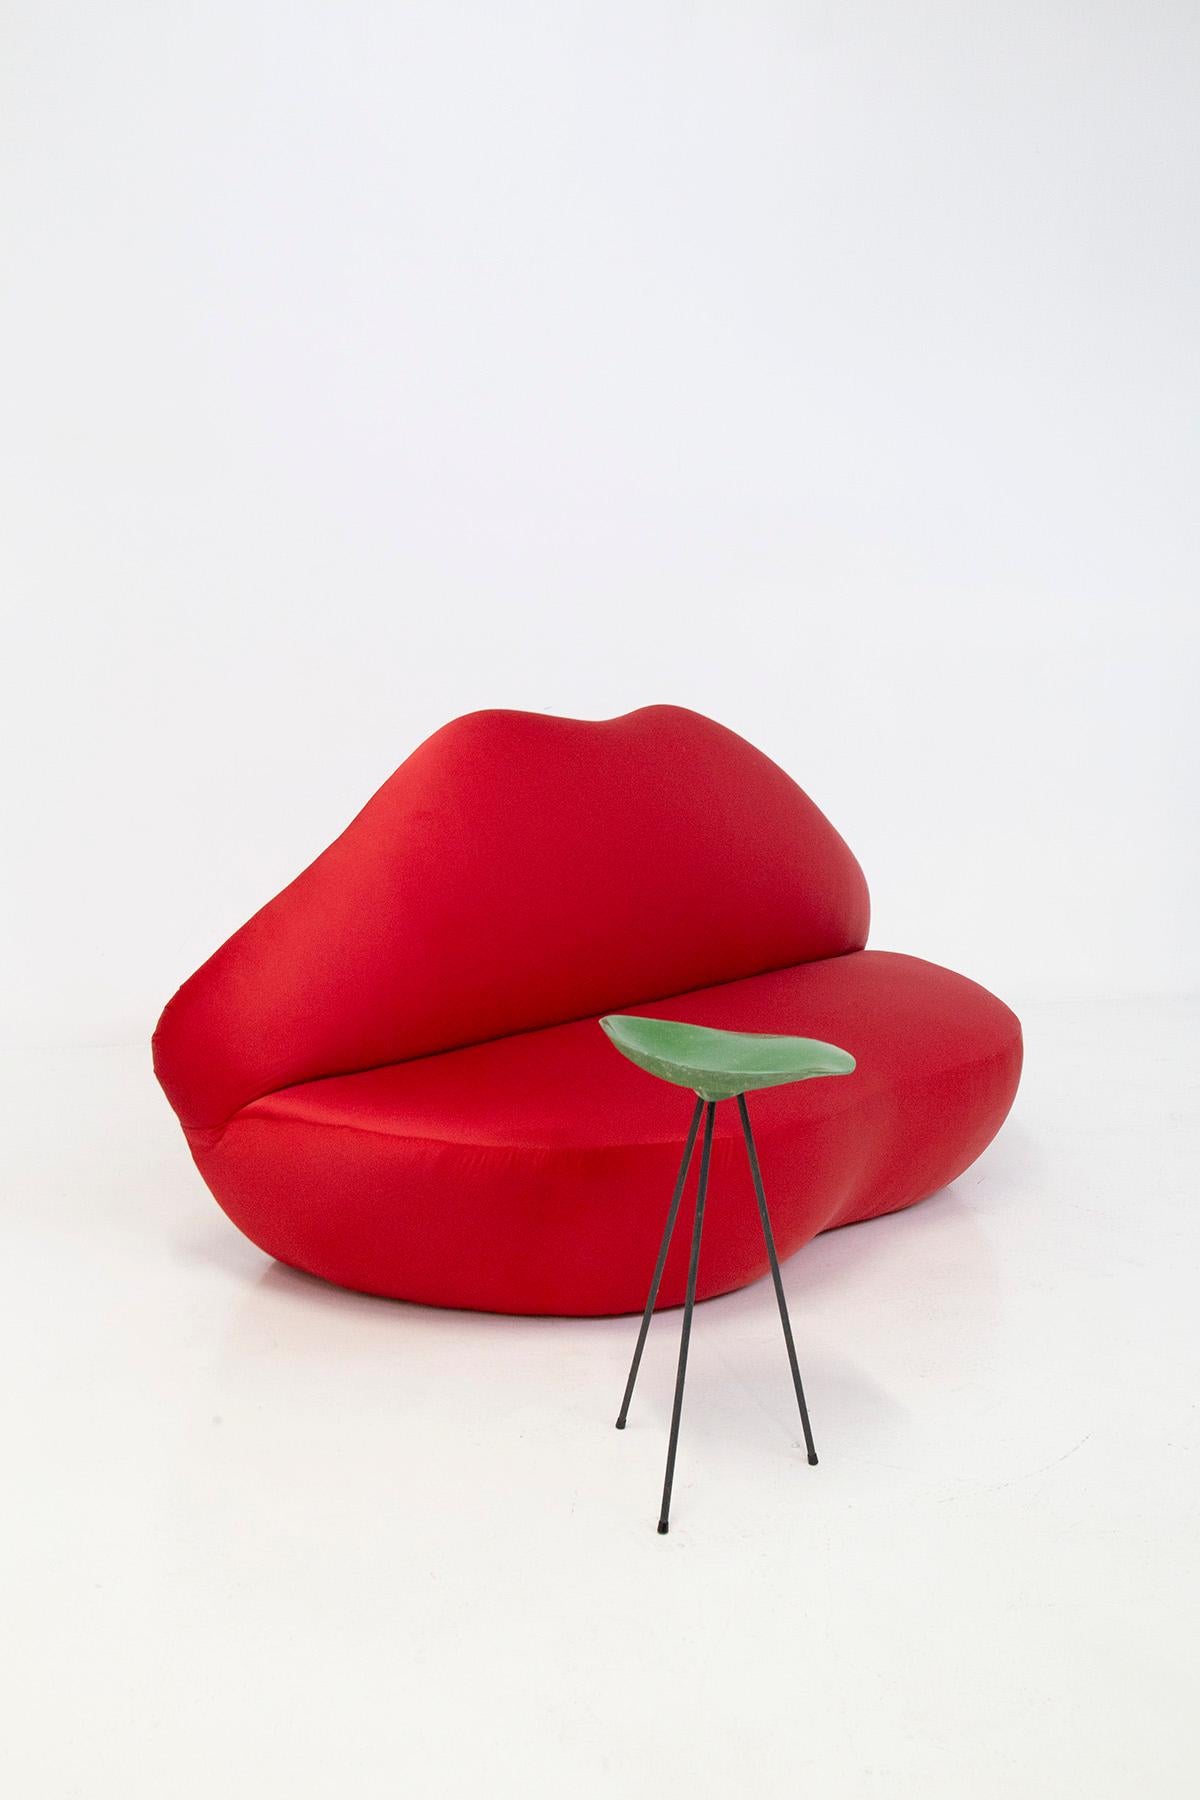 Late 20th Century Iconic Italian Red Sofa Mod. Bocca Attributed. to Edra Studio 65